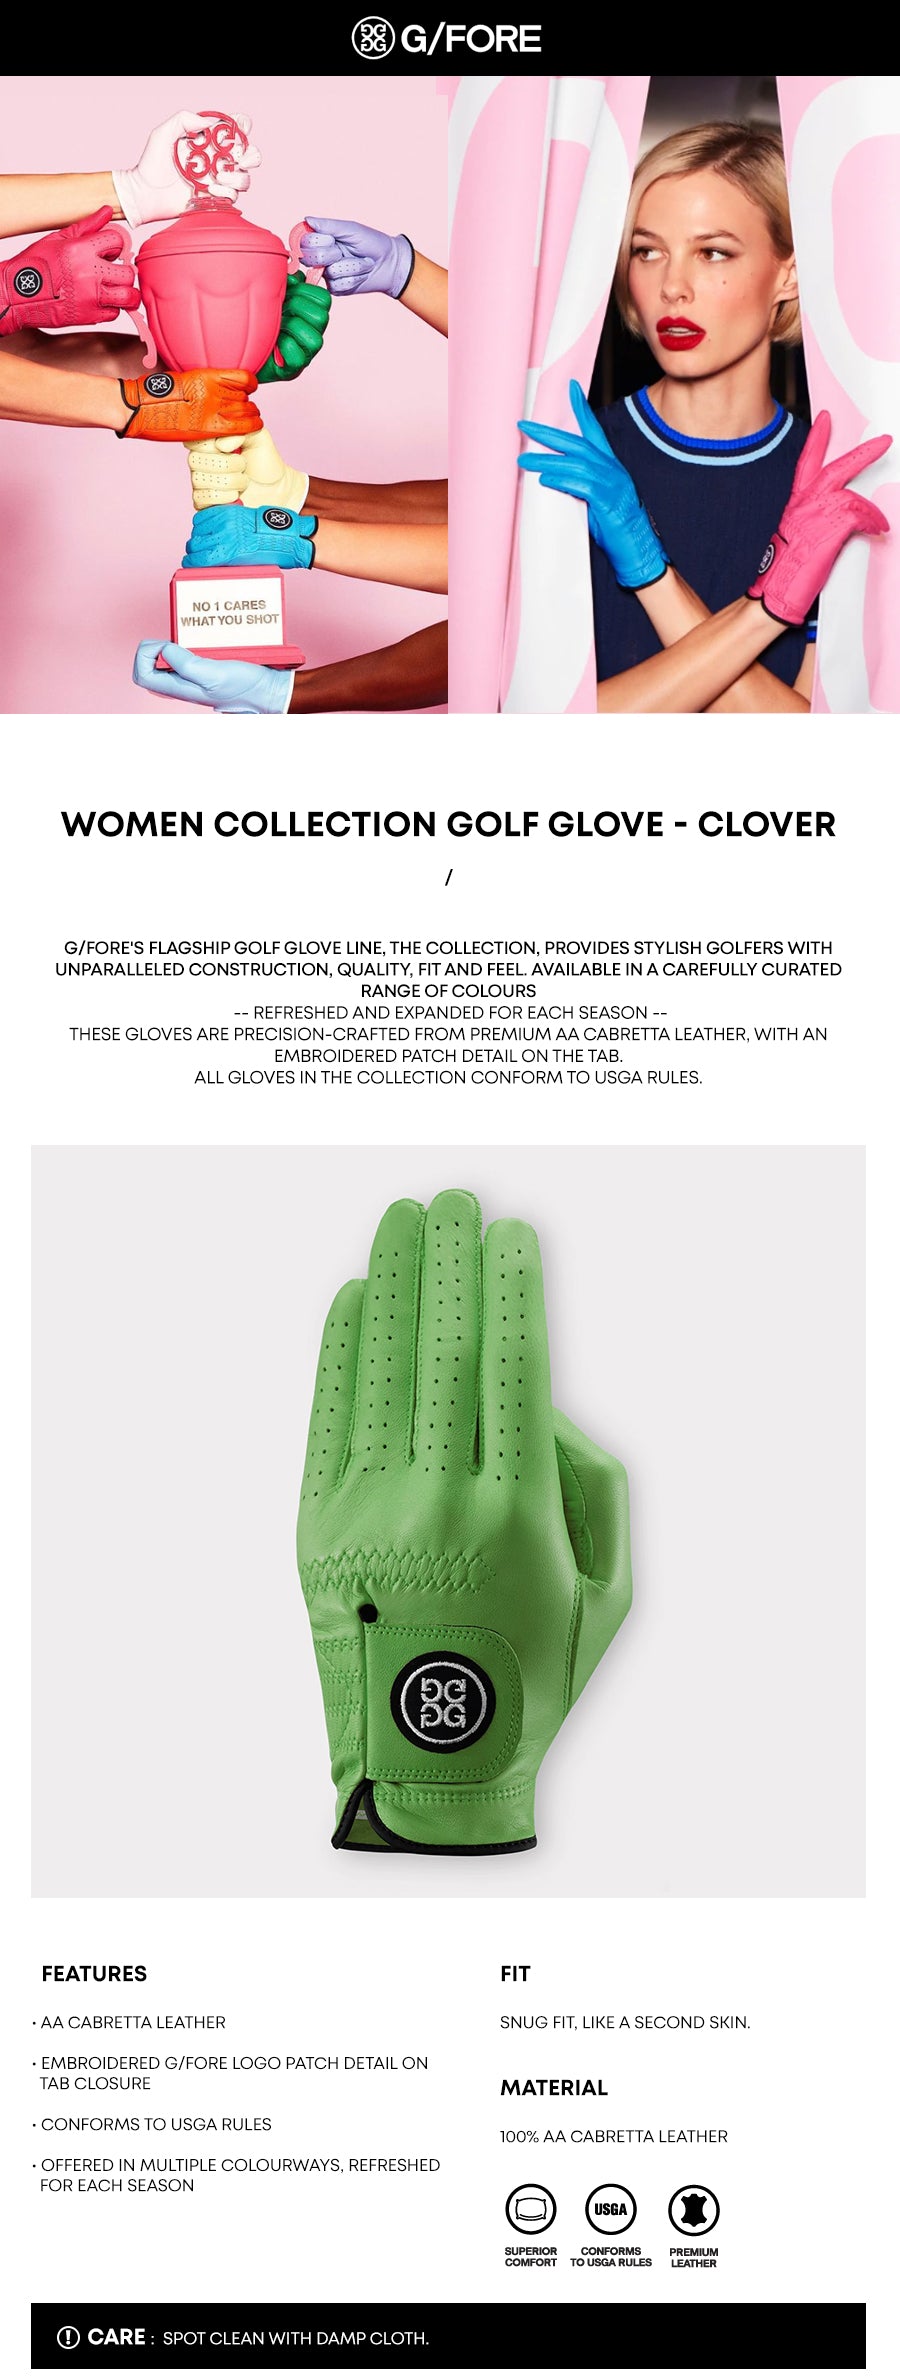 gfore-women-collection-golf-glove-clover